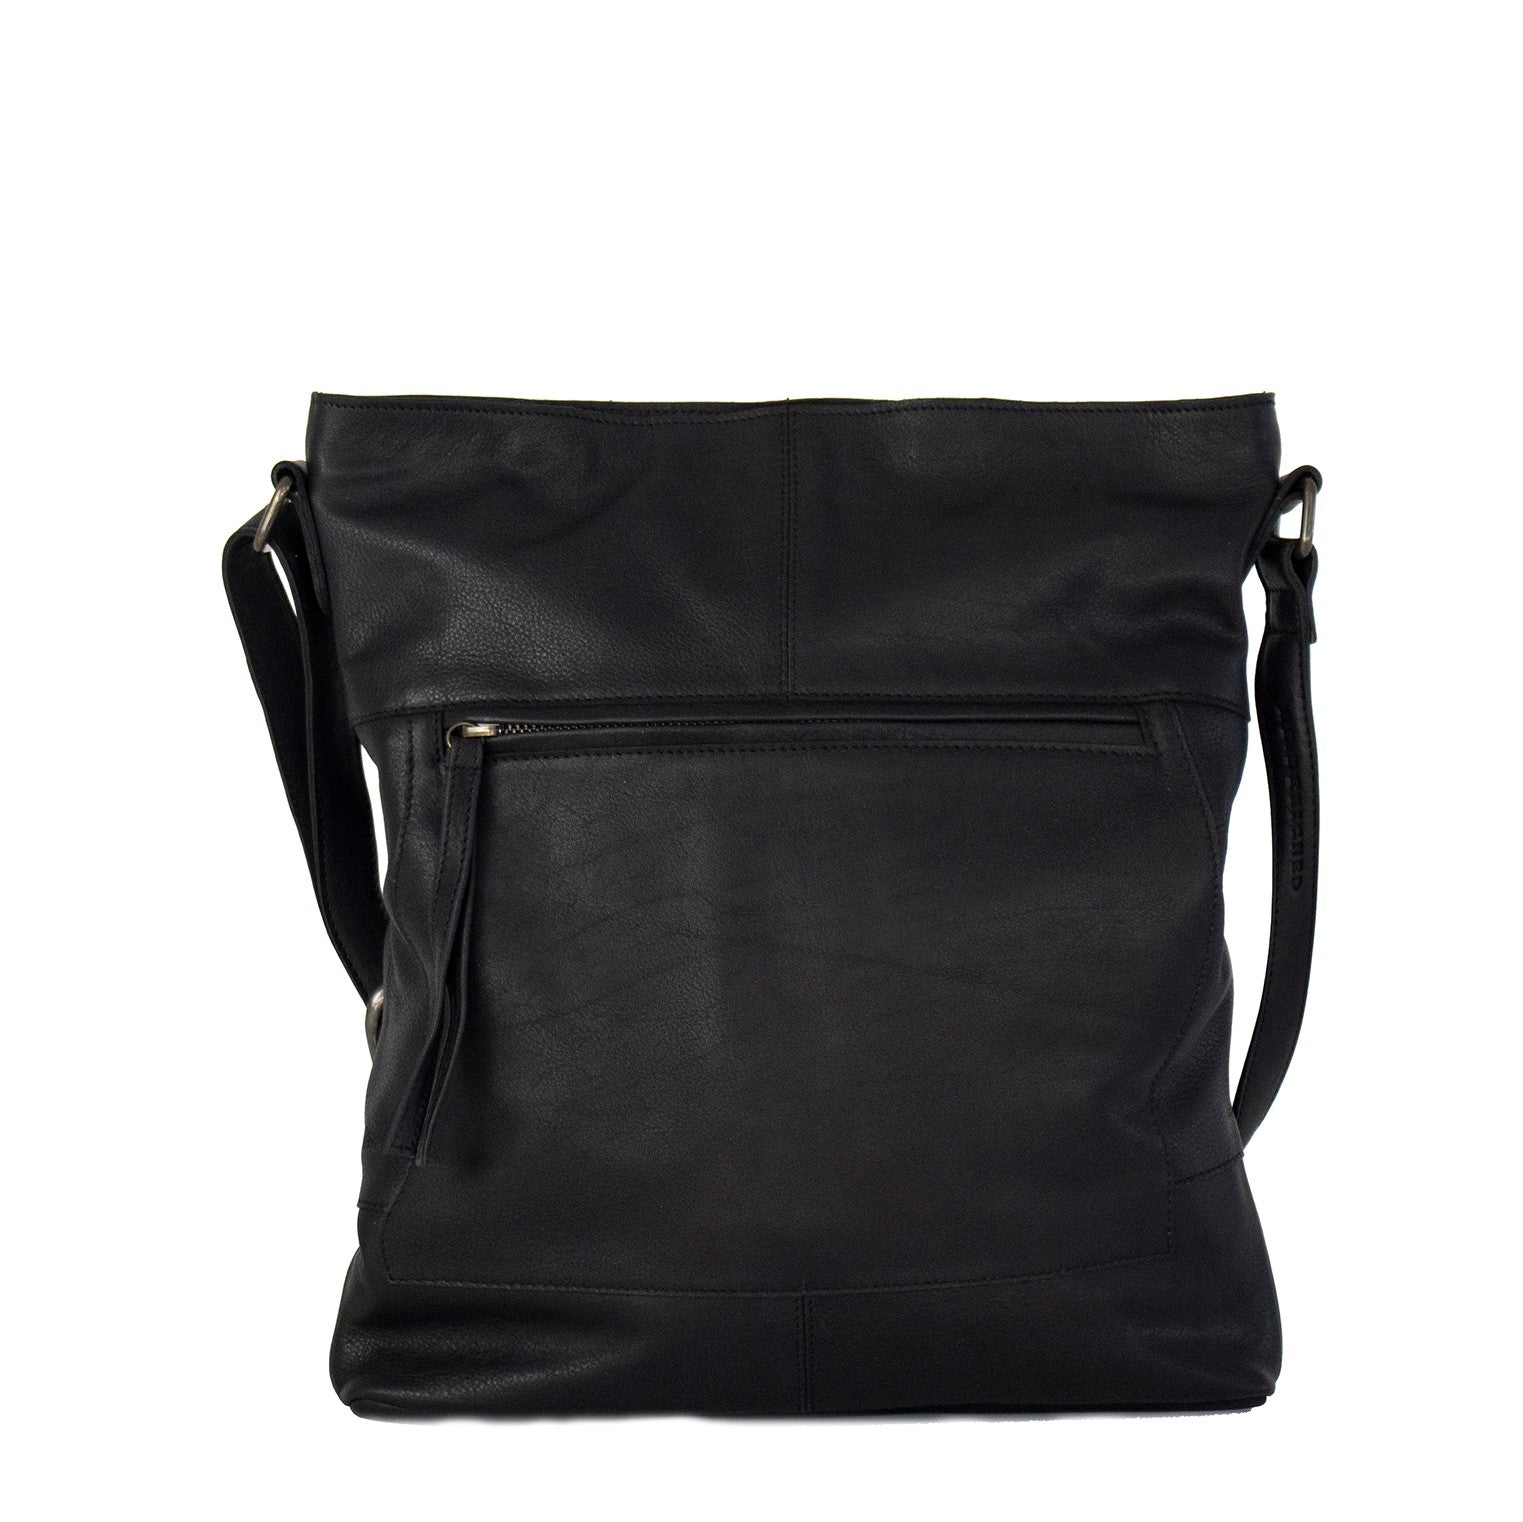 Storslet Urban Bag Black